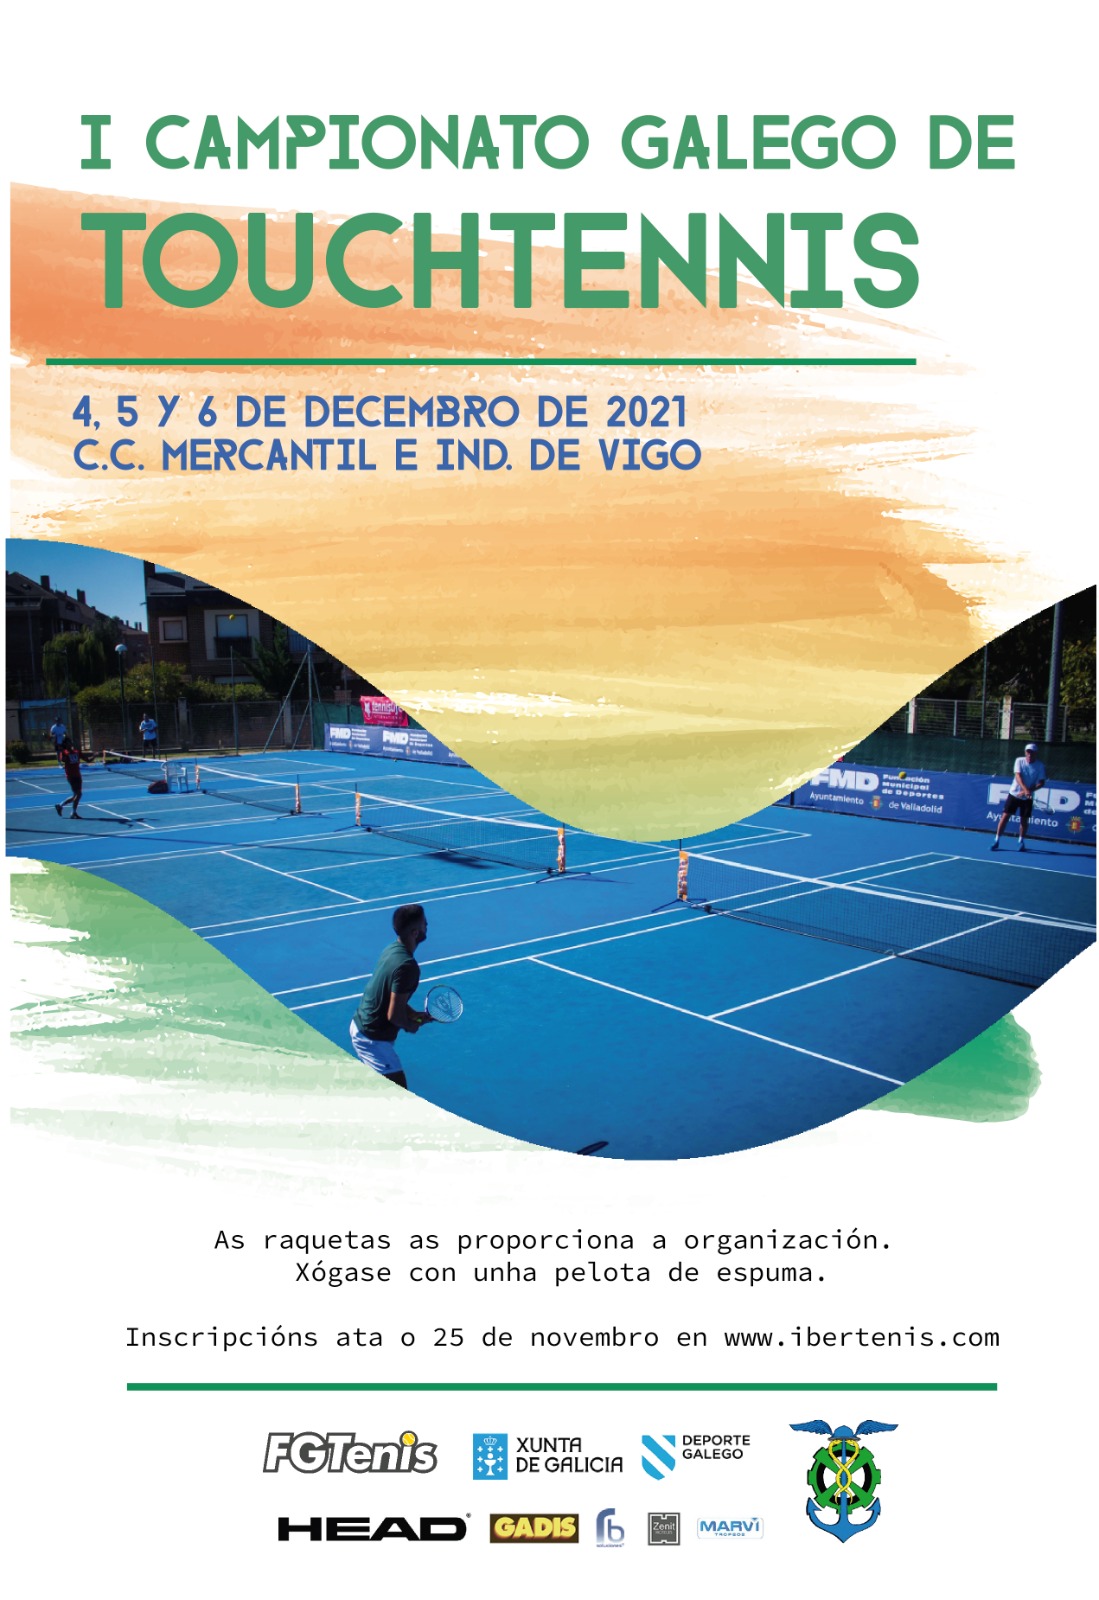 I Campionato Galego de touchtennis